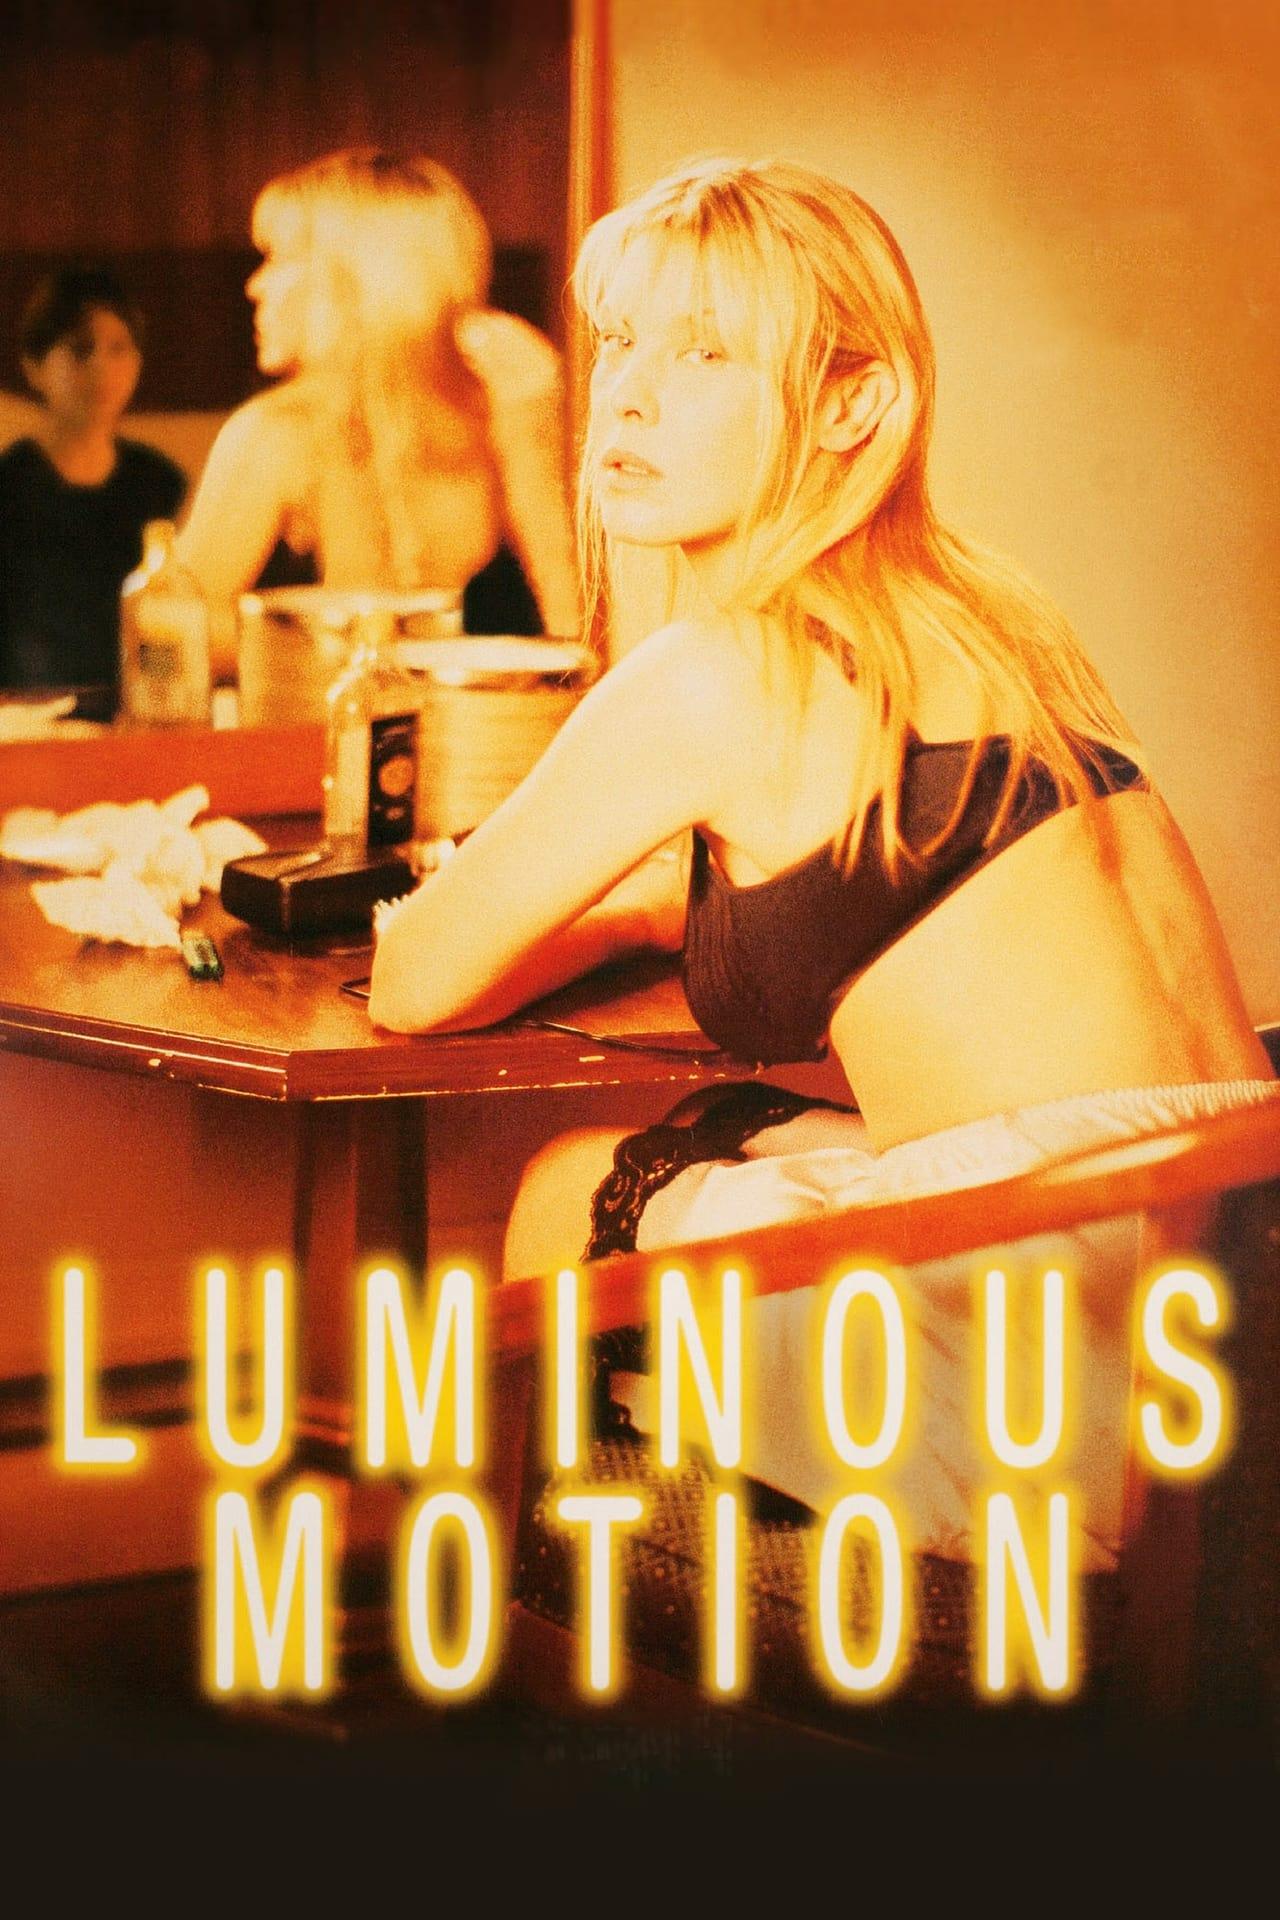 Luminous Motion poster